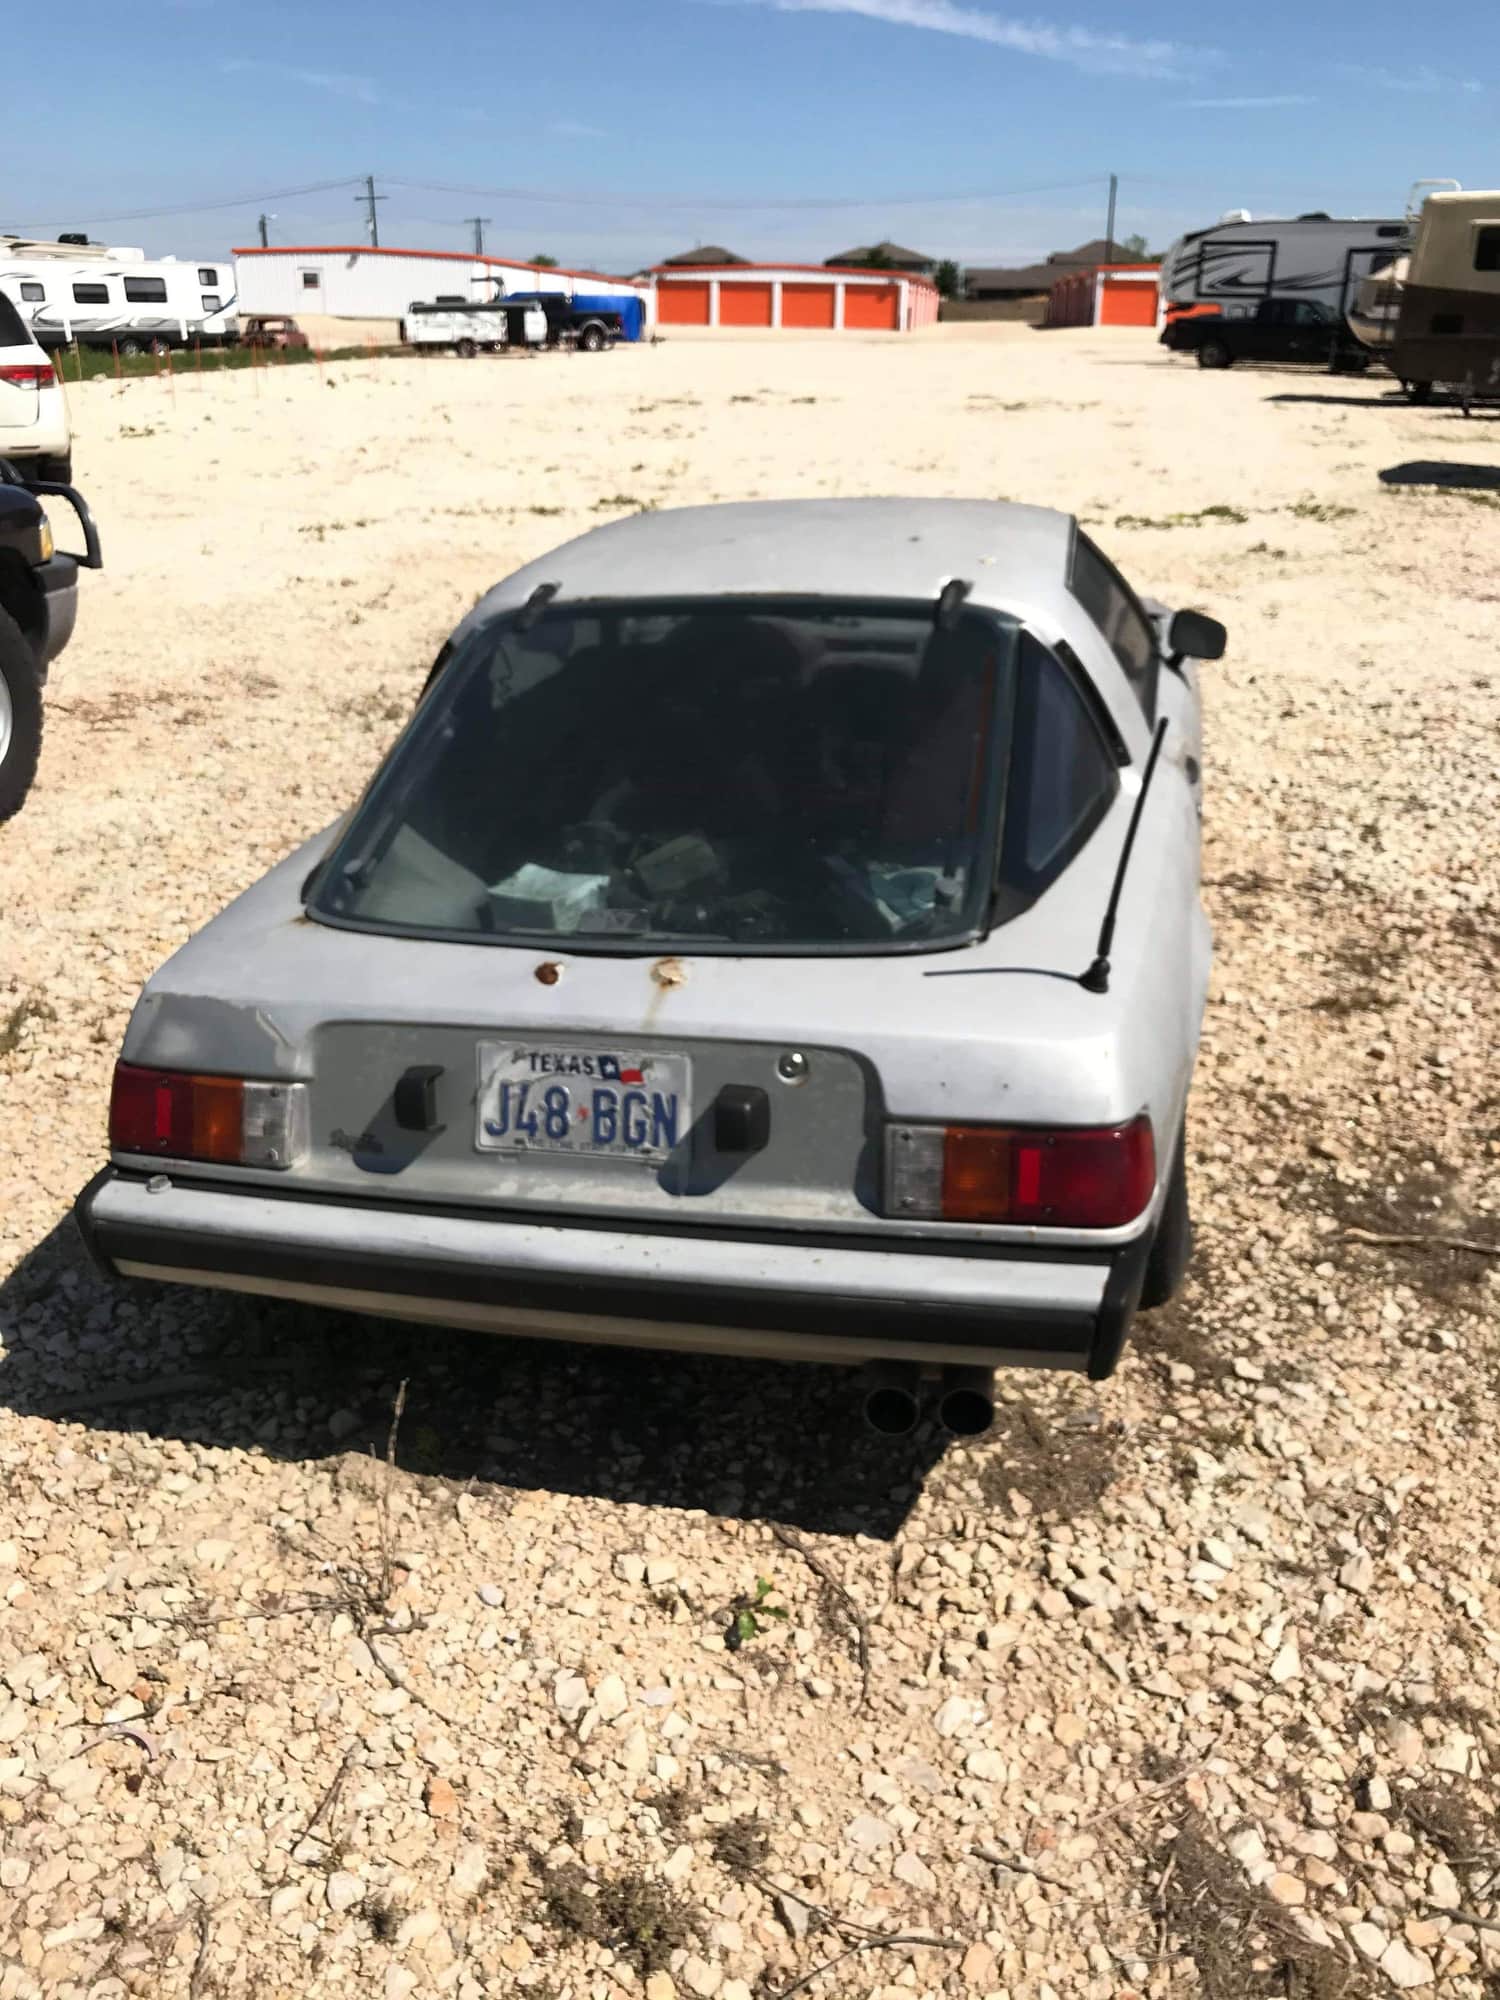 1979 Mazda RX-7 - 2x 1979 RX7s (1x LE), 1x 1980 RX7 (Solar Gold) - San Antonio, TX 78209, United States